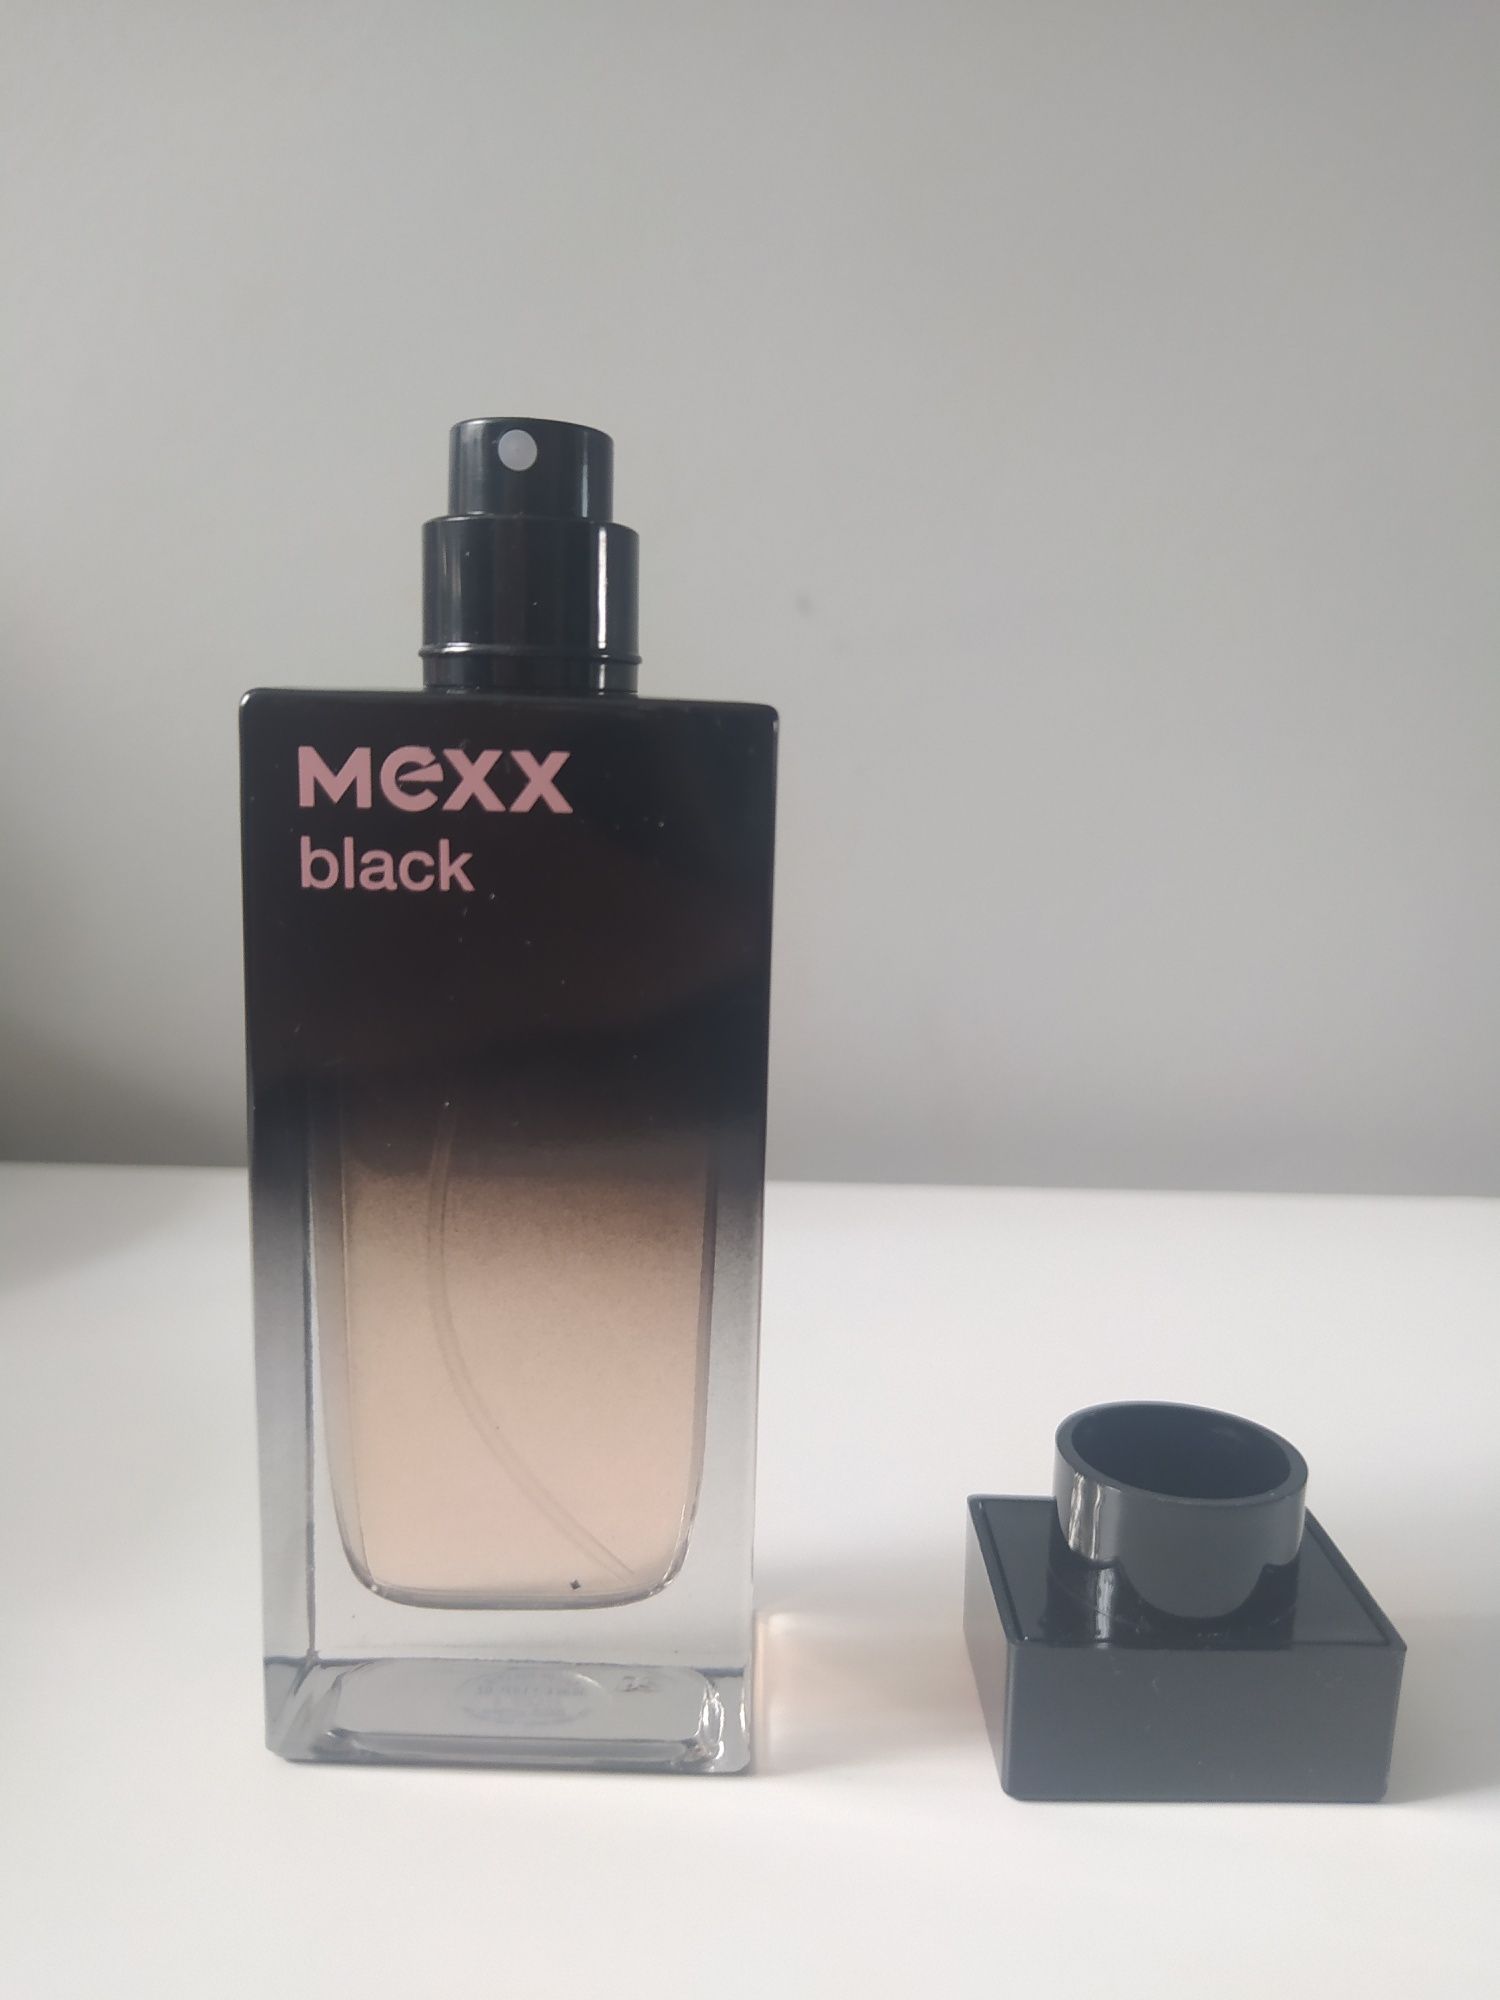 Mexx black kosmetyk